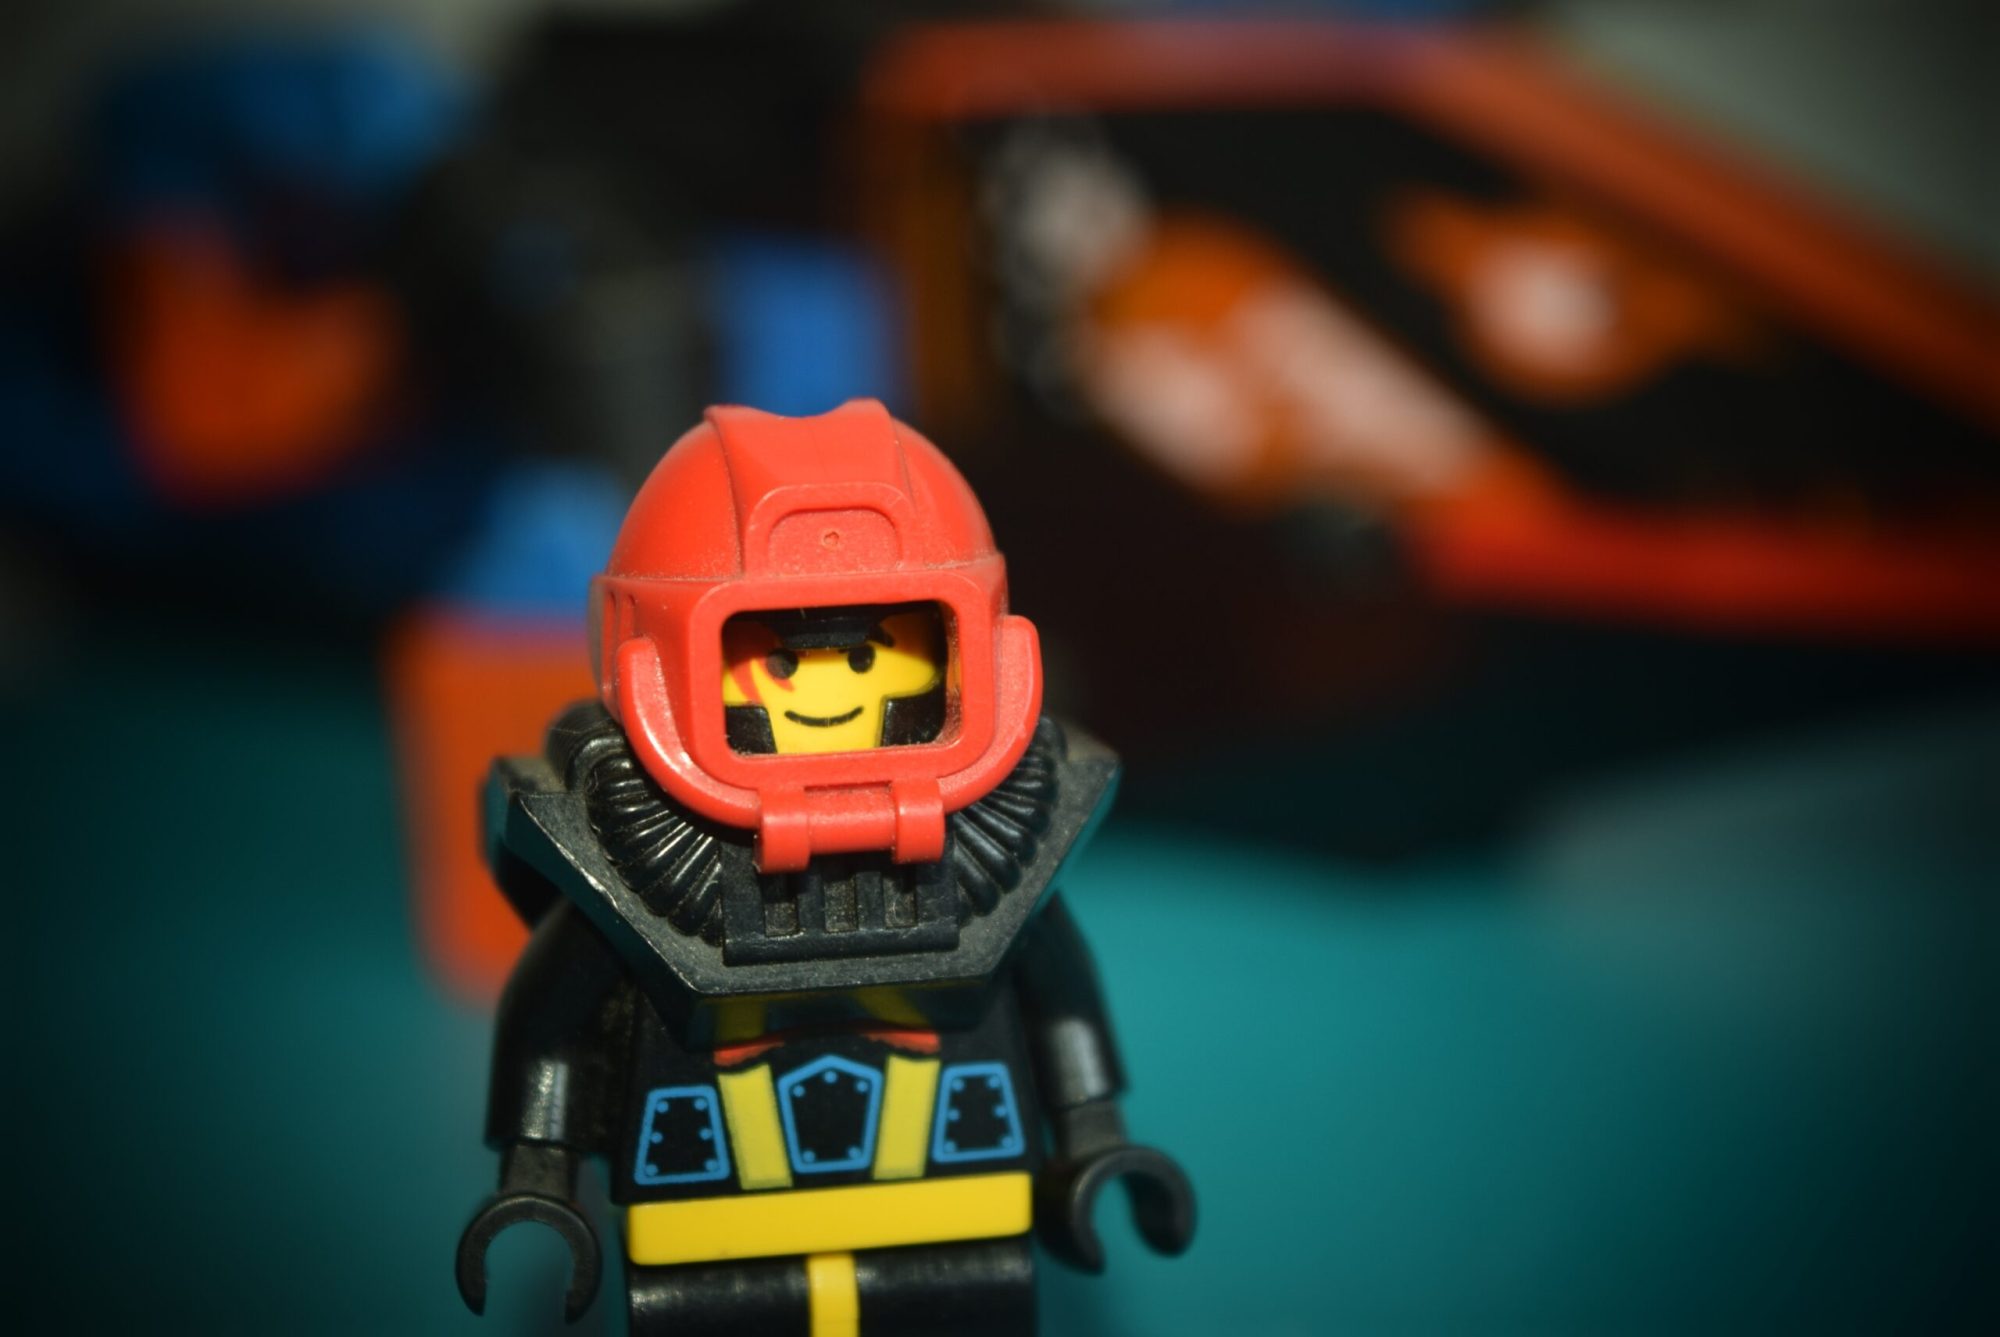 LEGO minifigure from a classic lego set